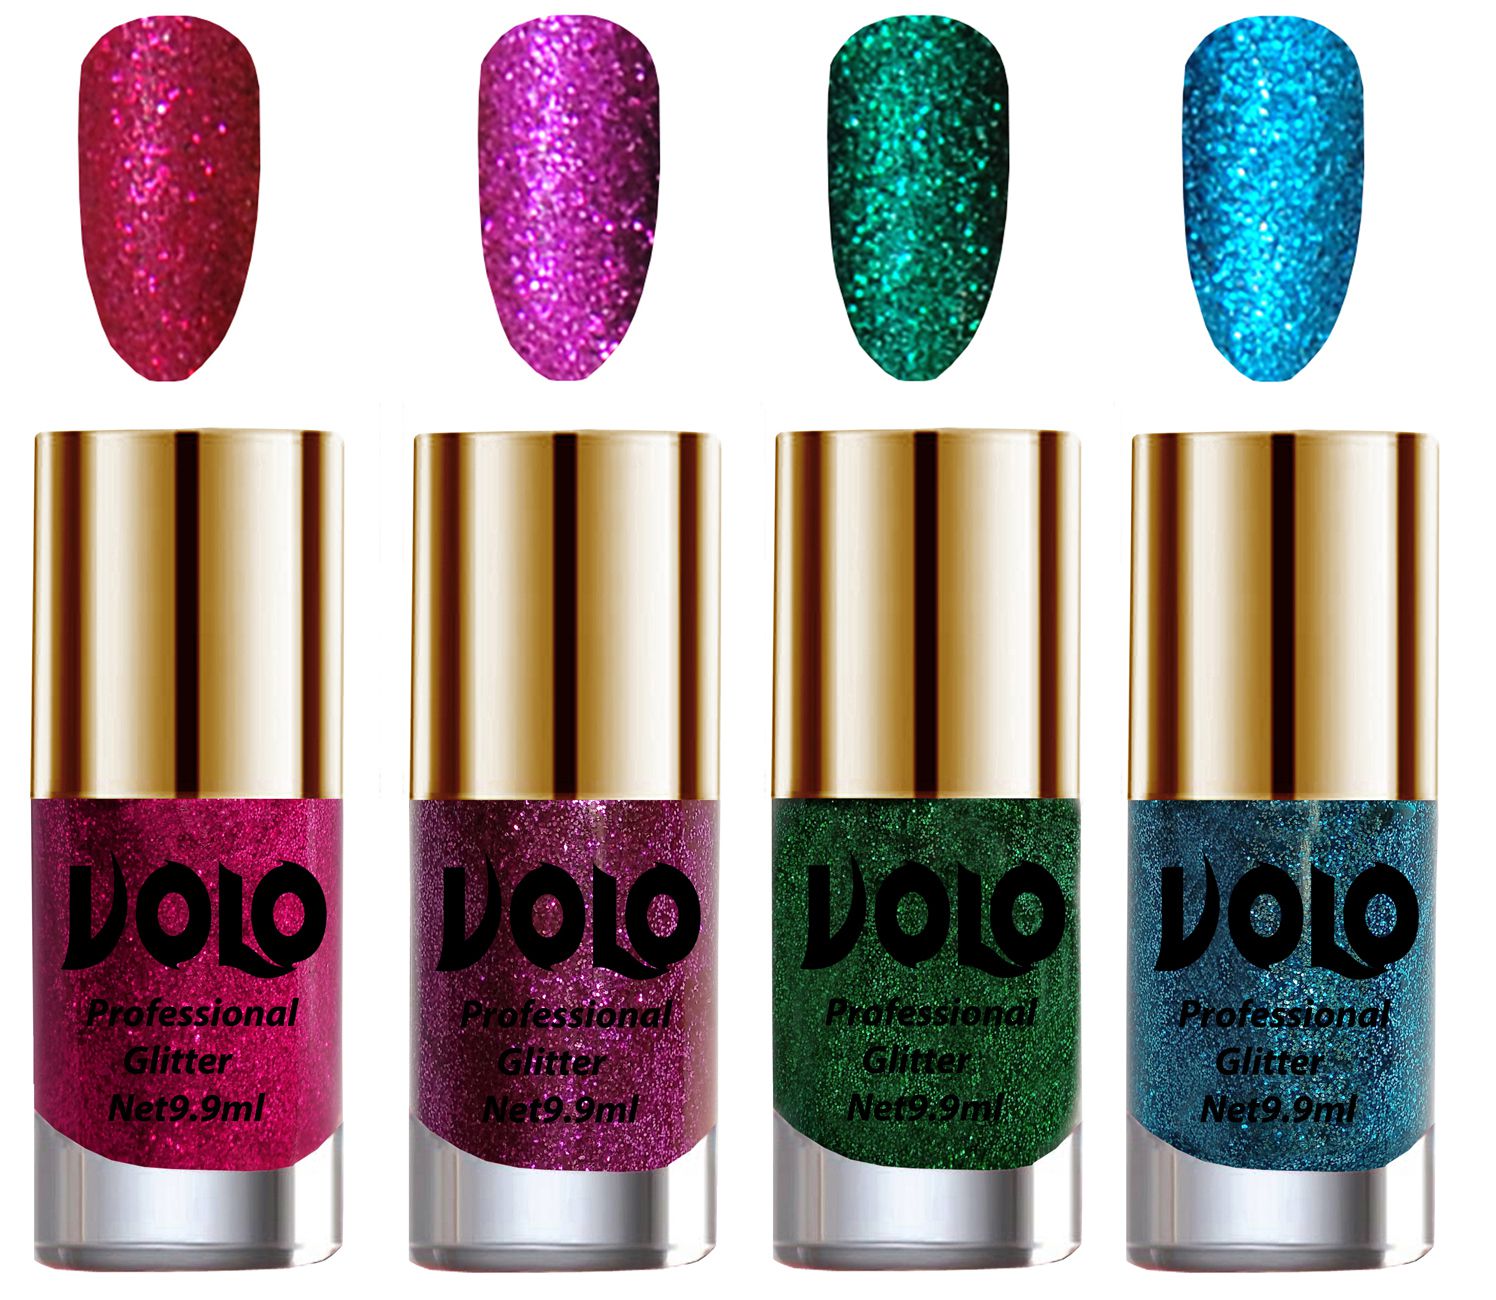     			VOLO Professionally Used Glitter Shine Nail Polish Magenta,Purple,Green Blue Pack of 4 39 mL